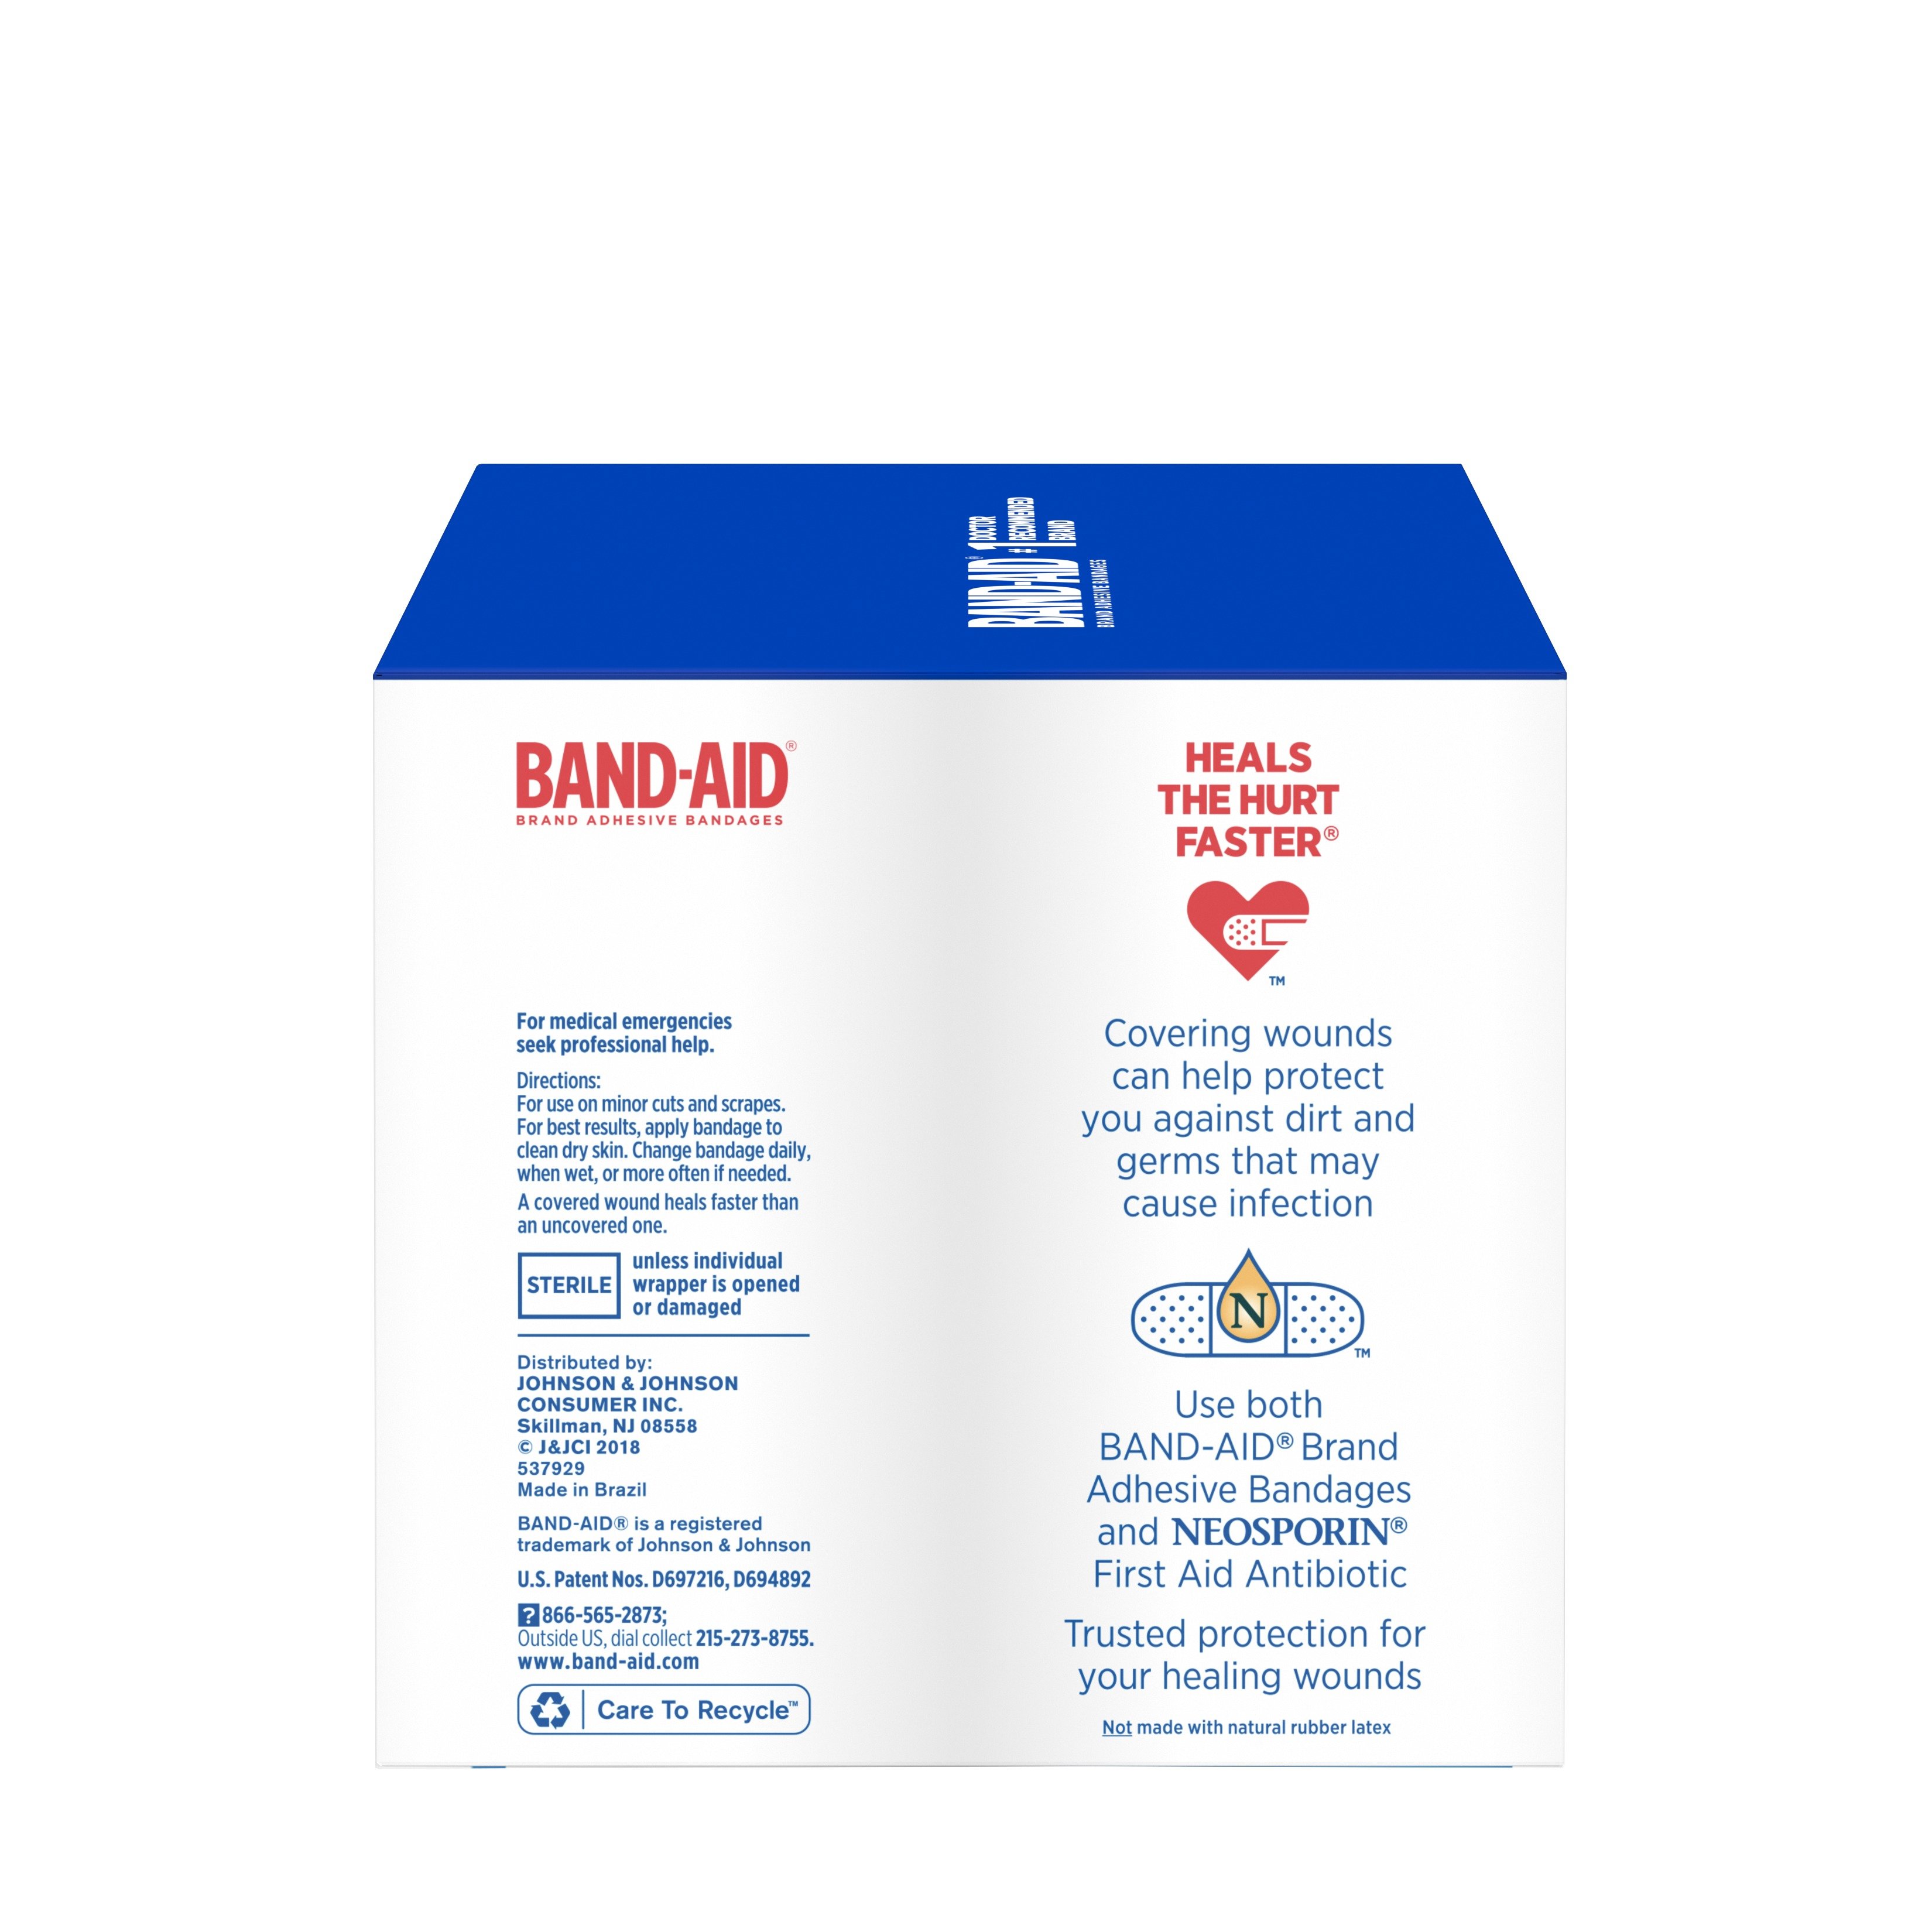 Band Aid Adhesive Bandage Family Variety Pack, Assorted Sizes, 30 Ct